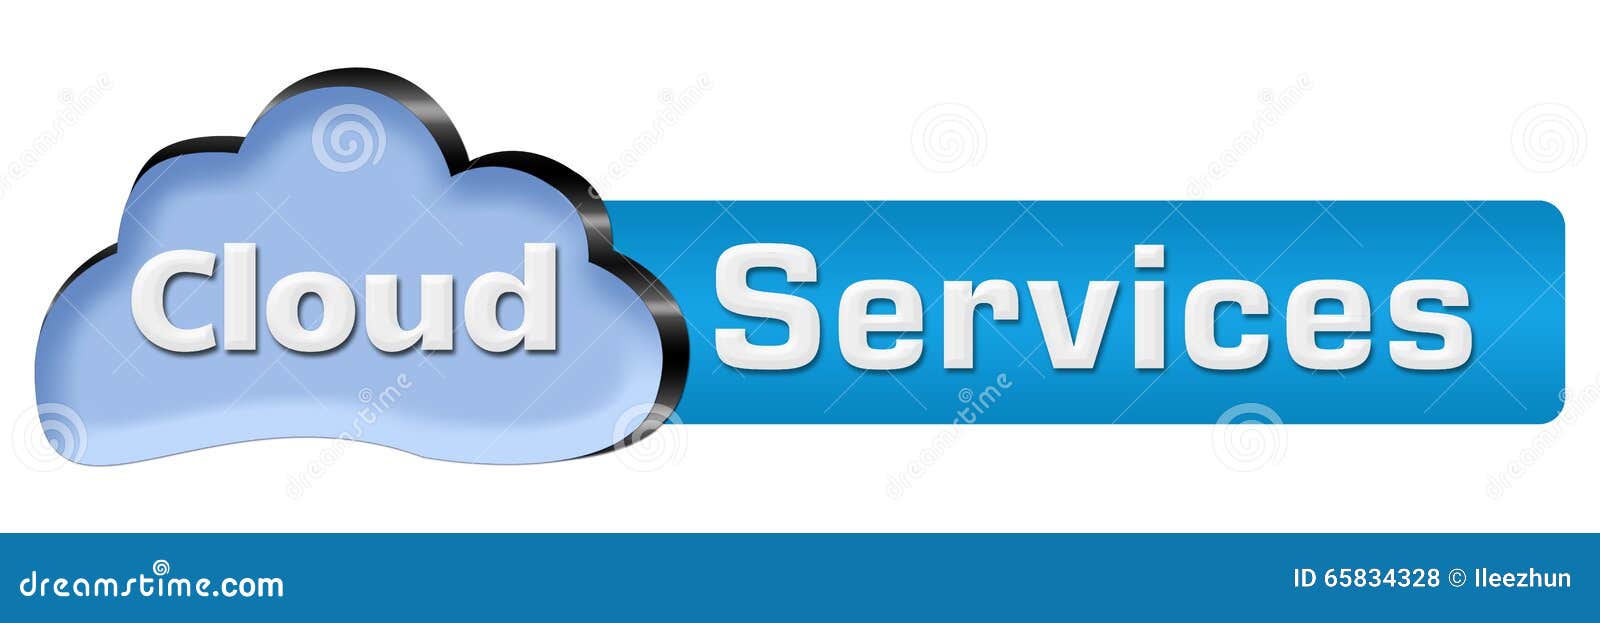 Cloud Services Cloud Horizontal. Cloud services concept image with text and cloud symbol.